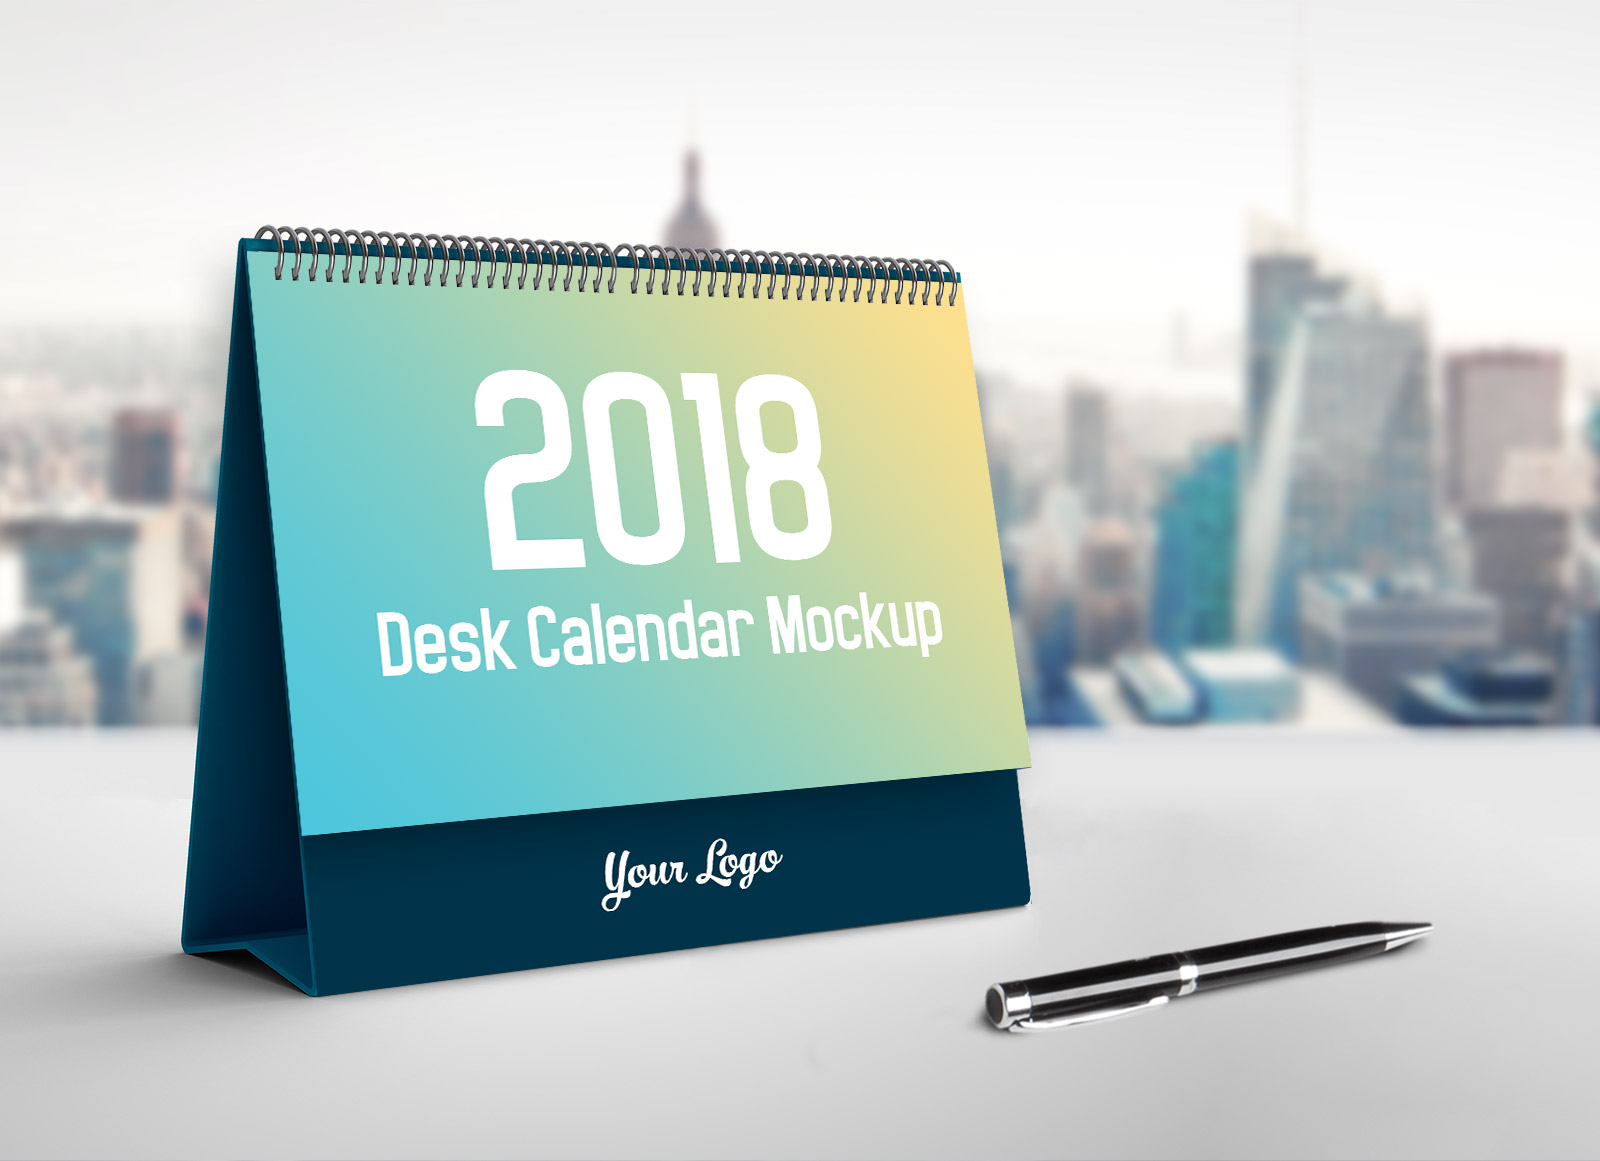 Free-Desk-Calendar-2018-Mockup-PSD-2